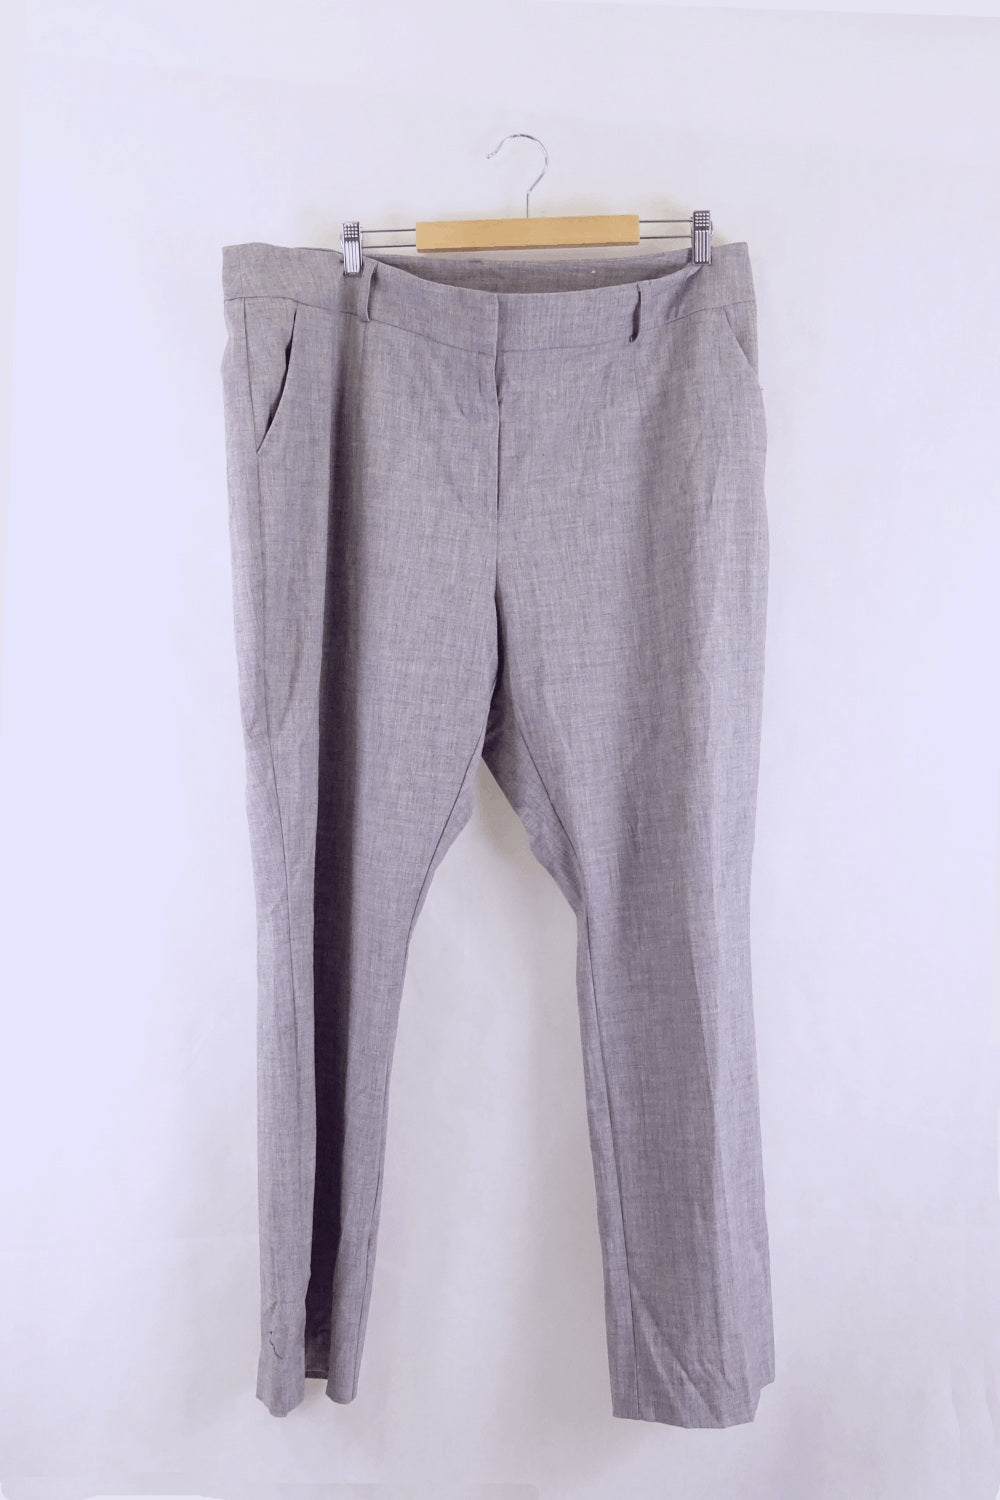 Tokito Curve Grey Pants 20